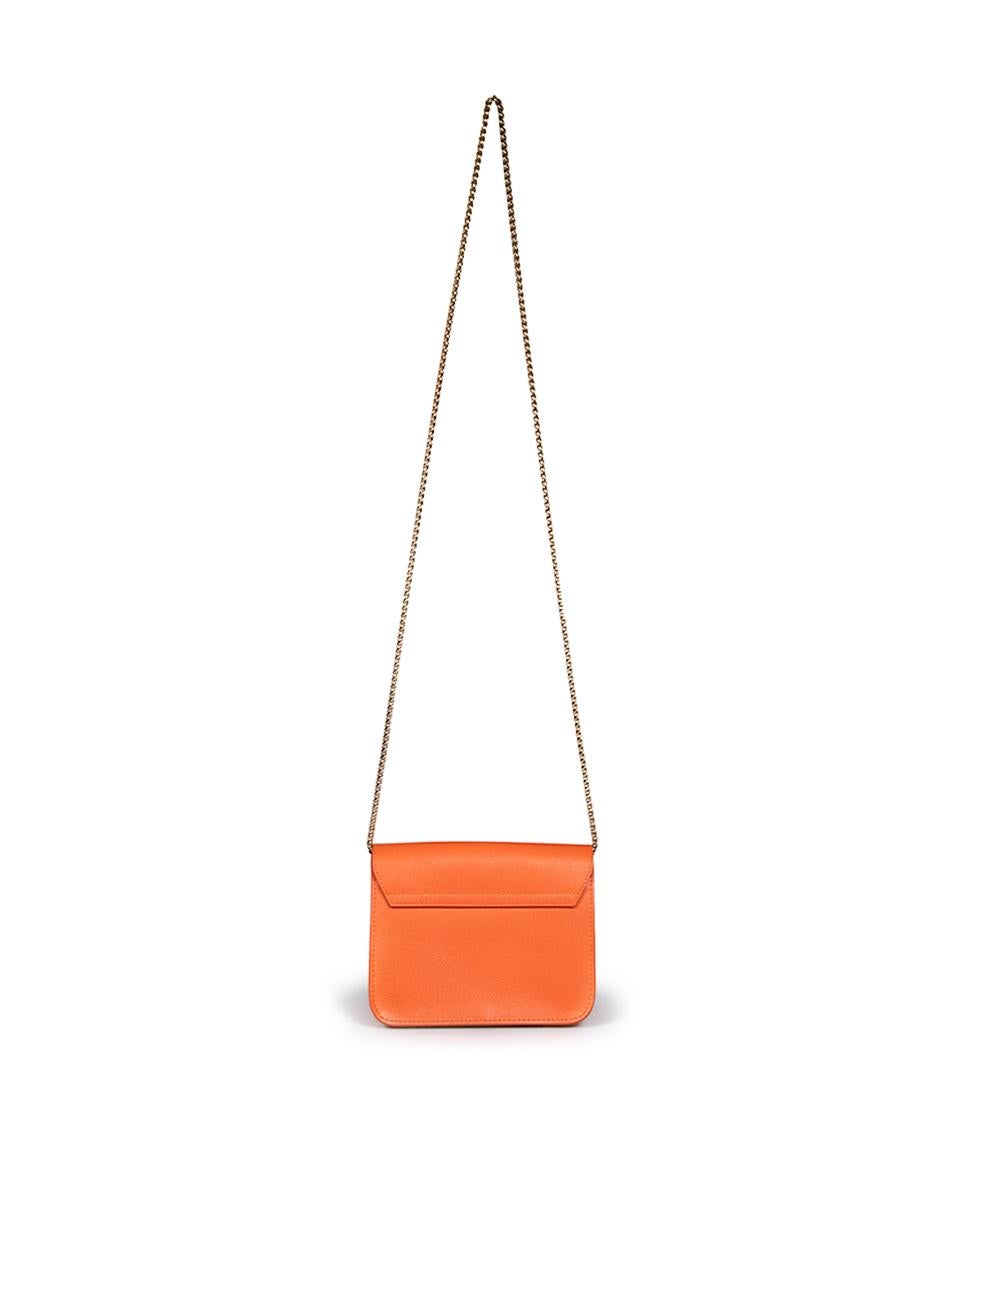 Furla Orange Leather Metropolis Small Crossbody Bag In Good Condition For Sale In London, GB